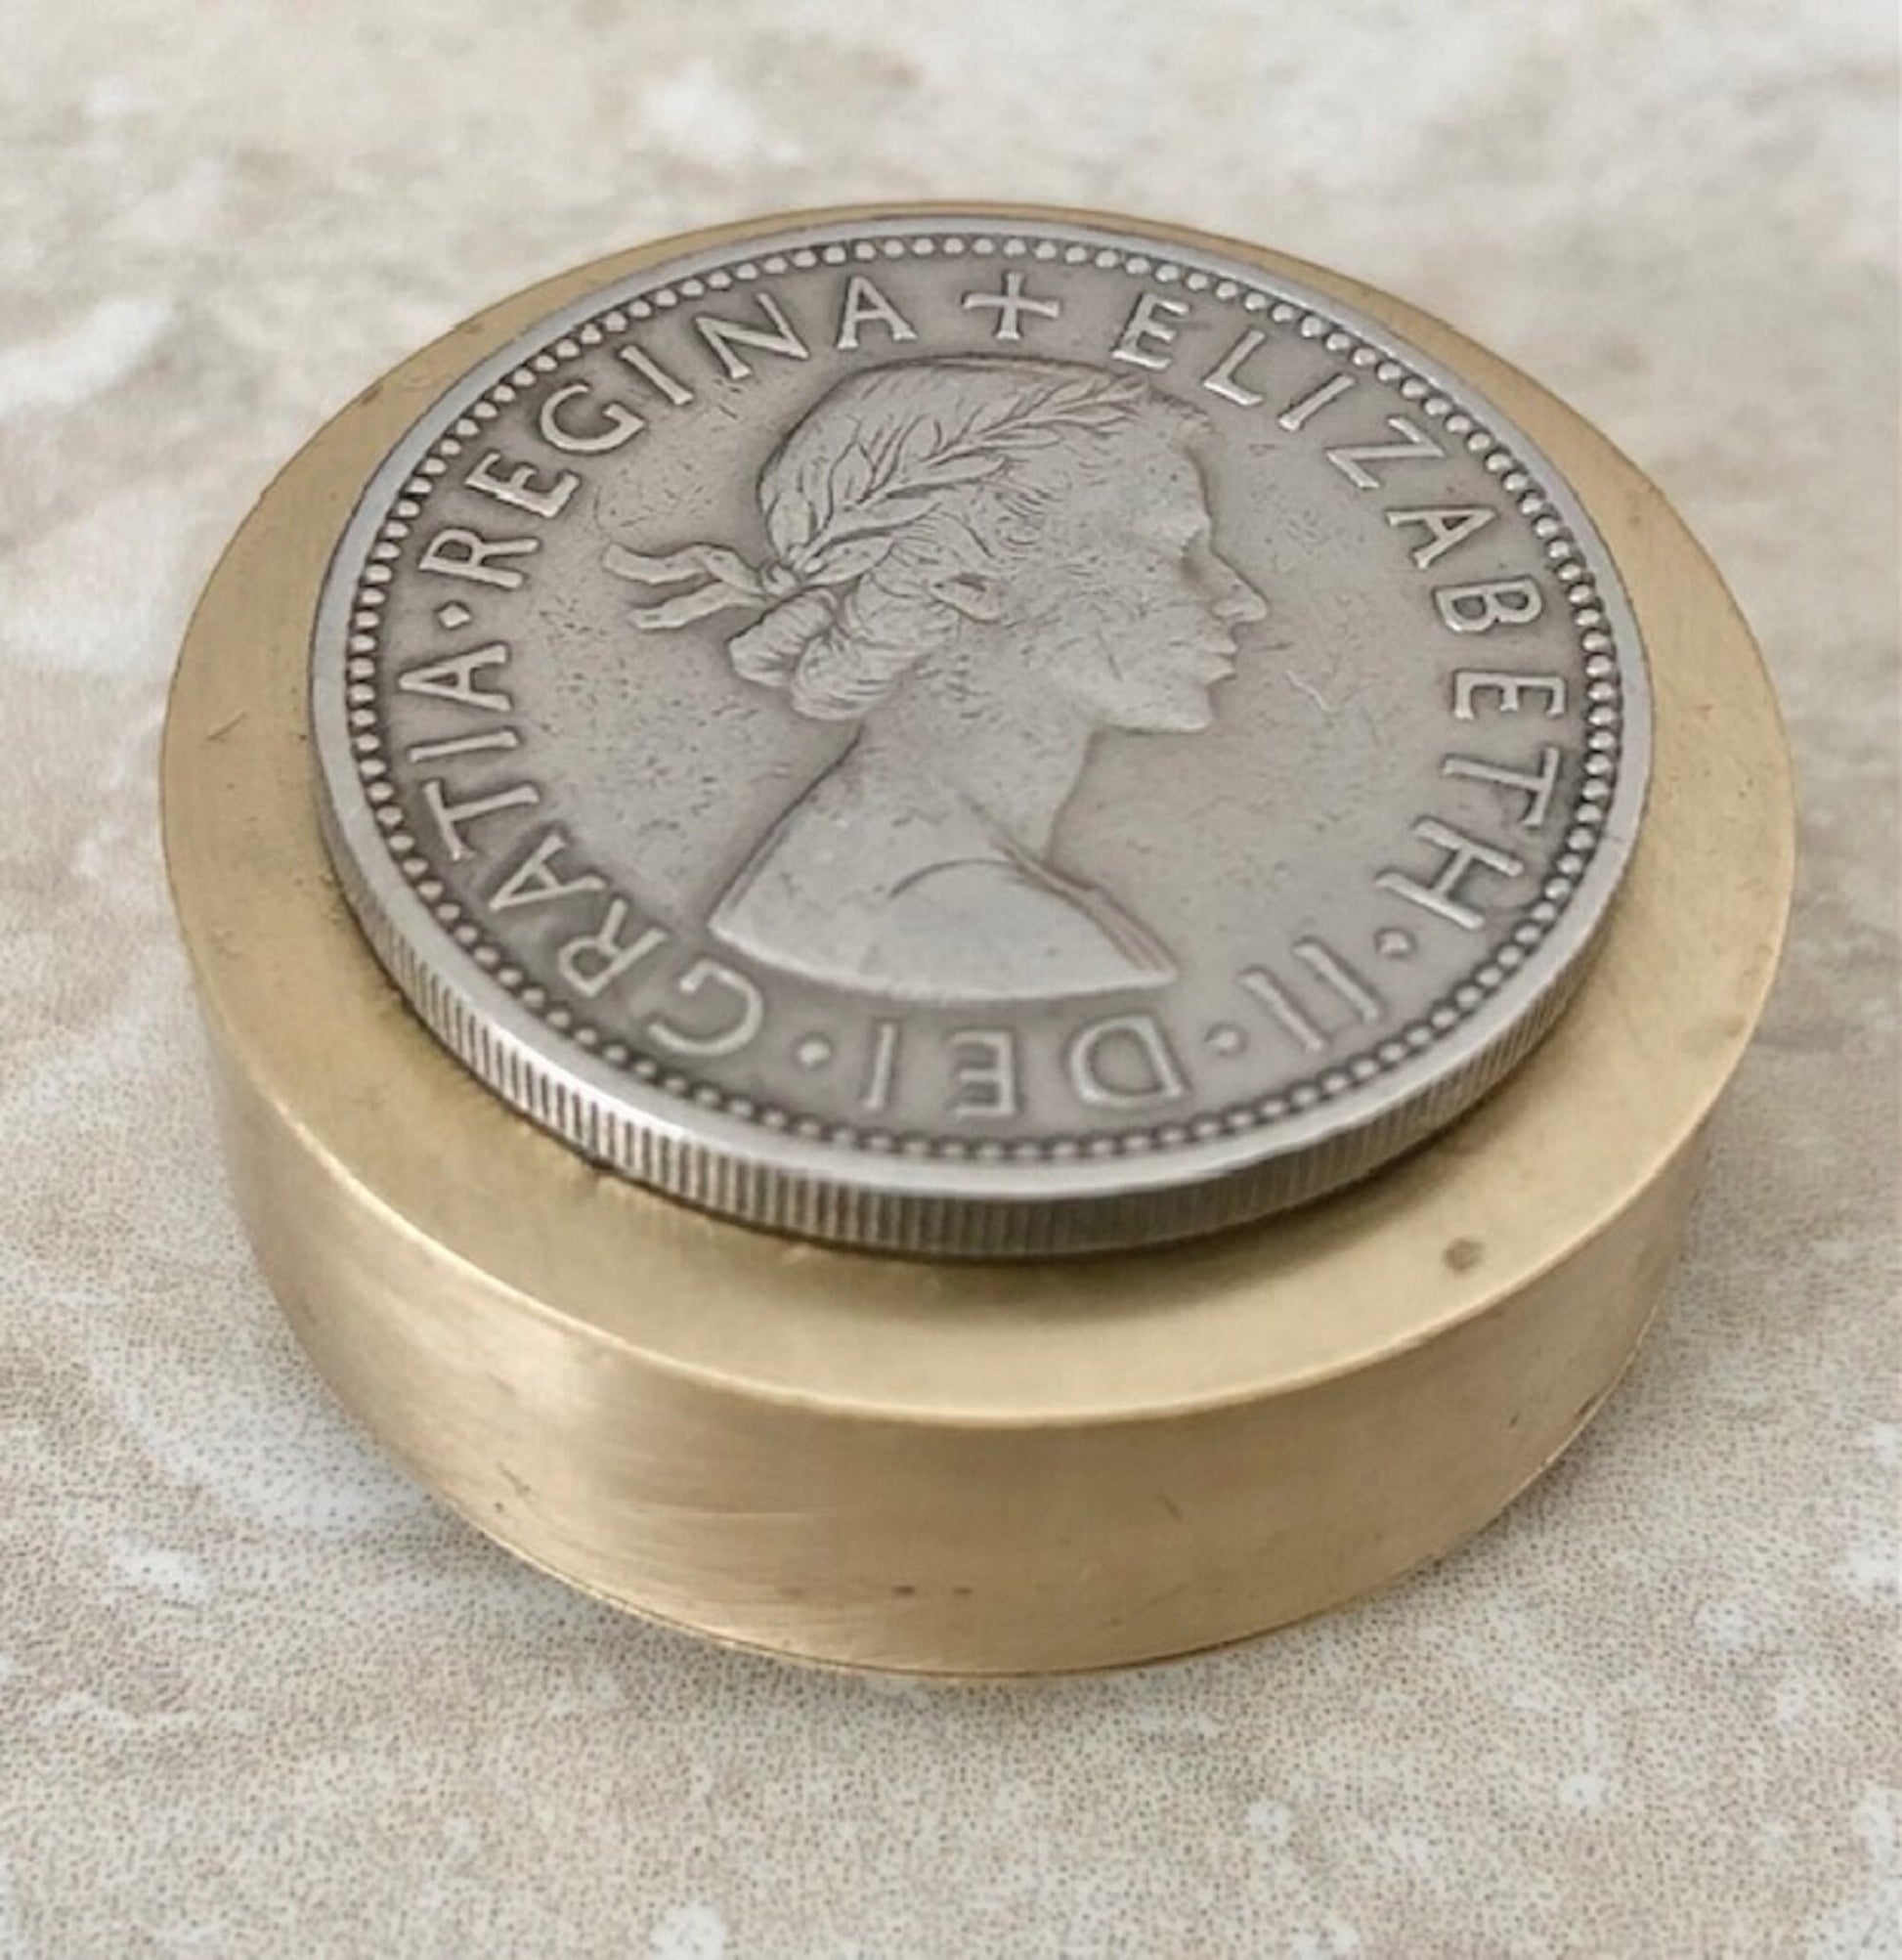 United Kingdom, Coin Pillbox, Shilling, Scotch Thistle Antique Stash Snuff Box, Box, Keepsake, Men's Gift, Jewelry, World Coin Collector